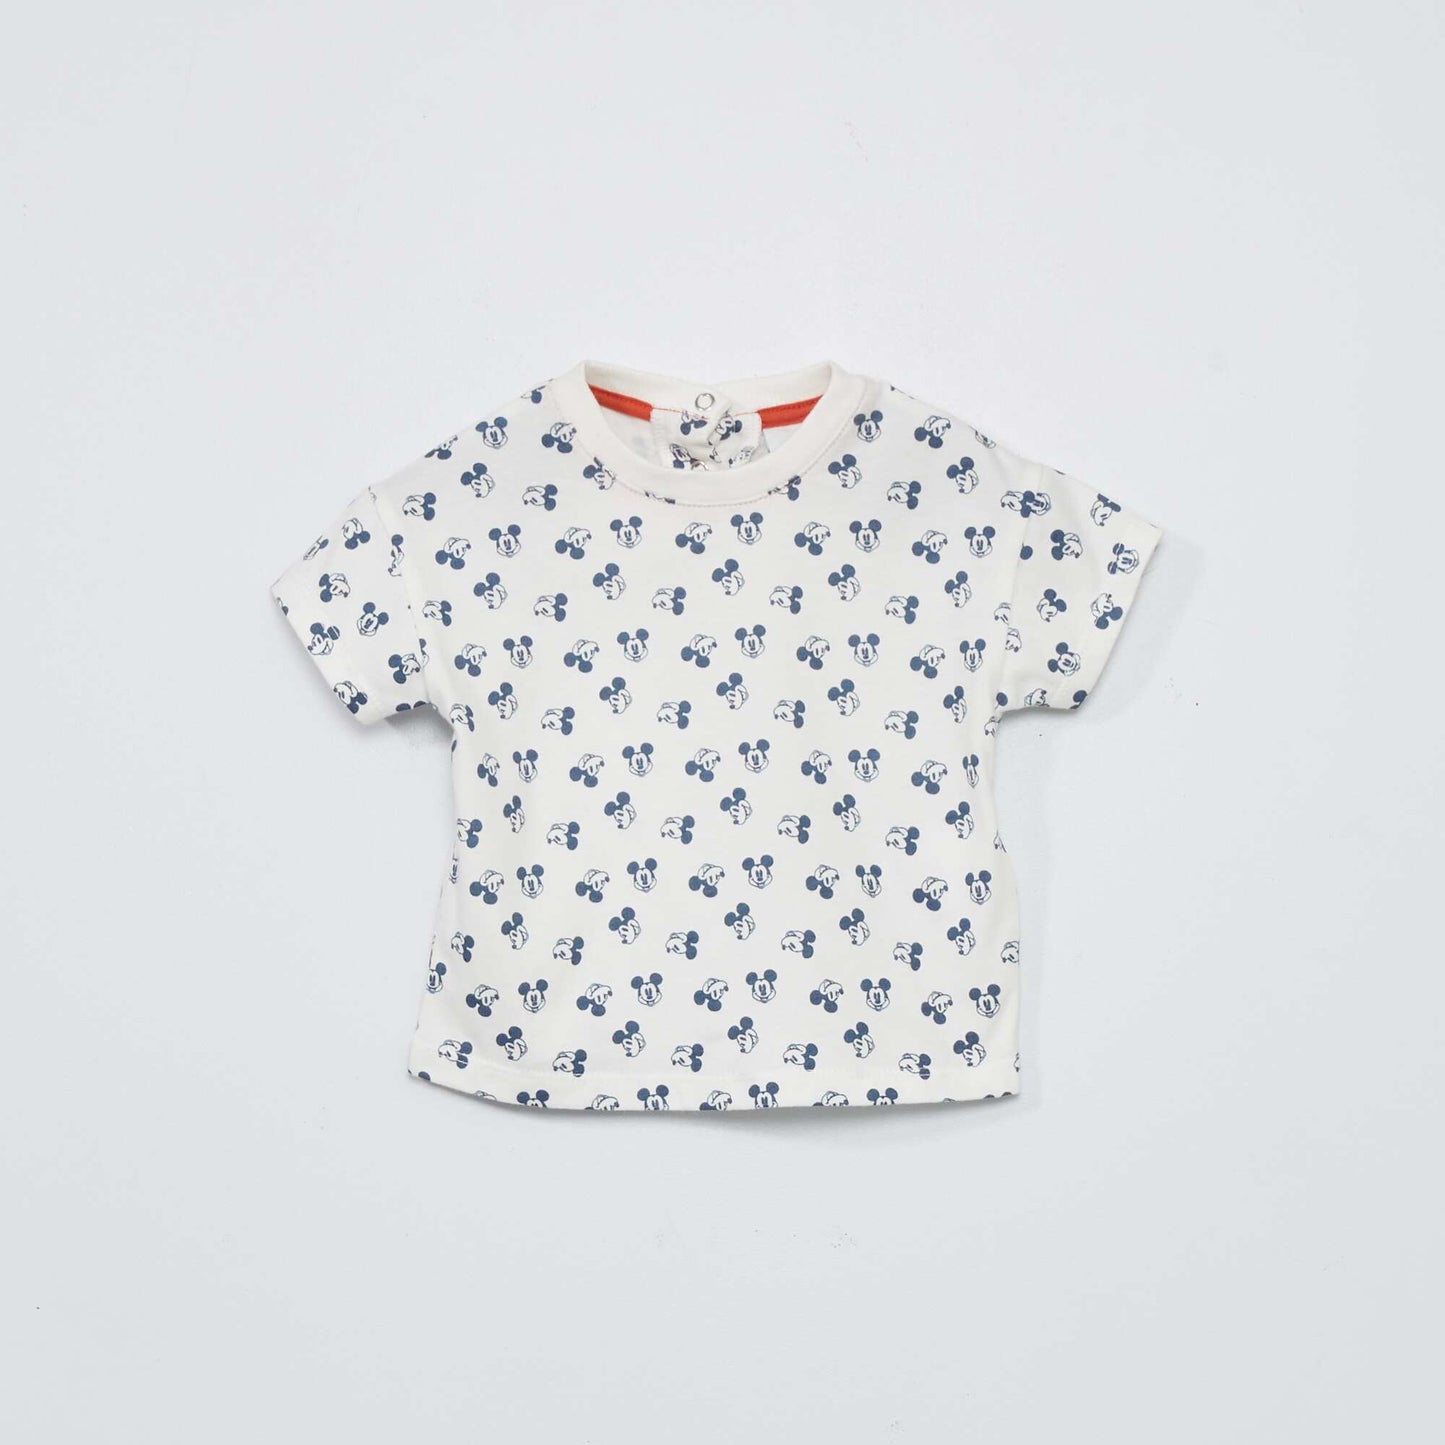 Ensemble salopette + tee-shirt 'Mickey' - 2 pi ces Blanc/gris